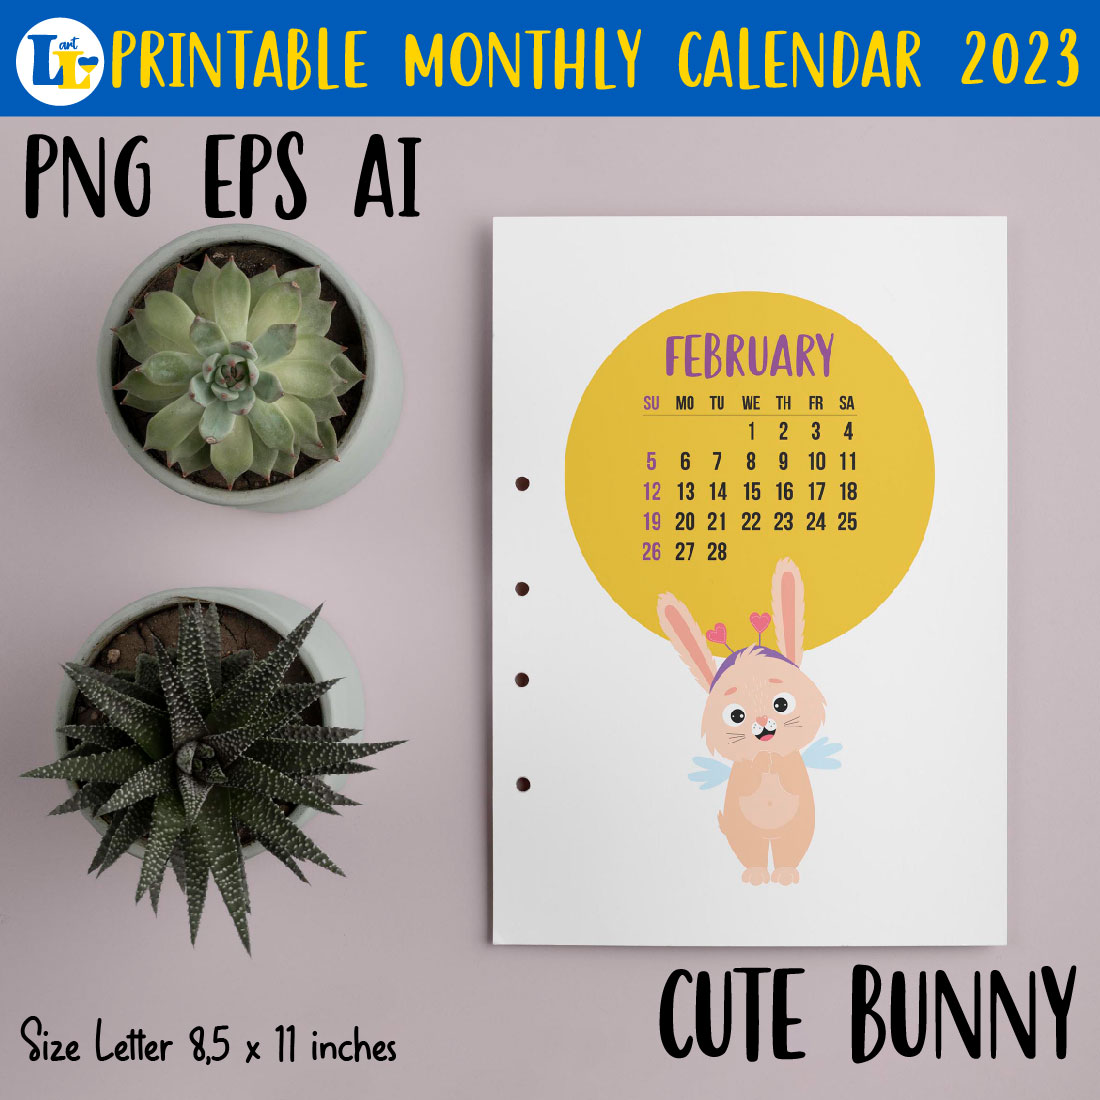 Printable Calendar 2023 with Cute Bunny previews.